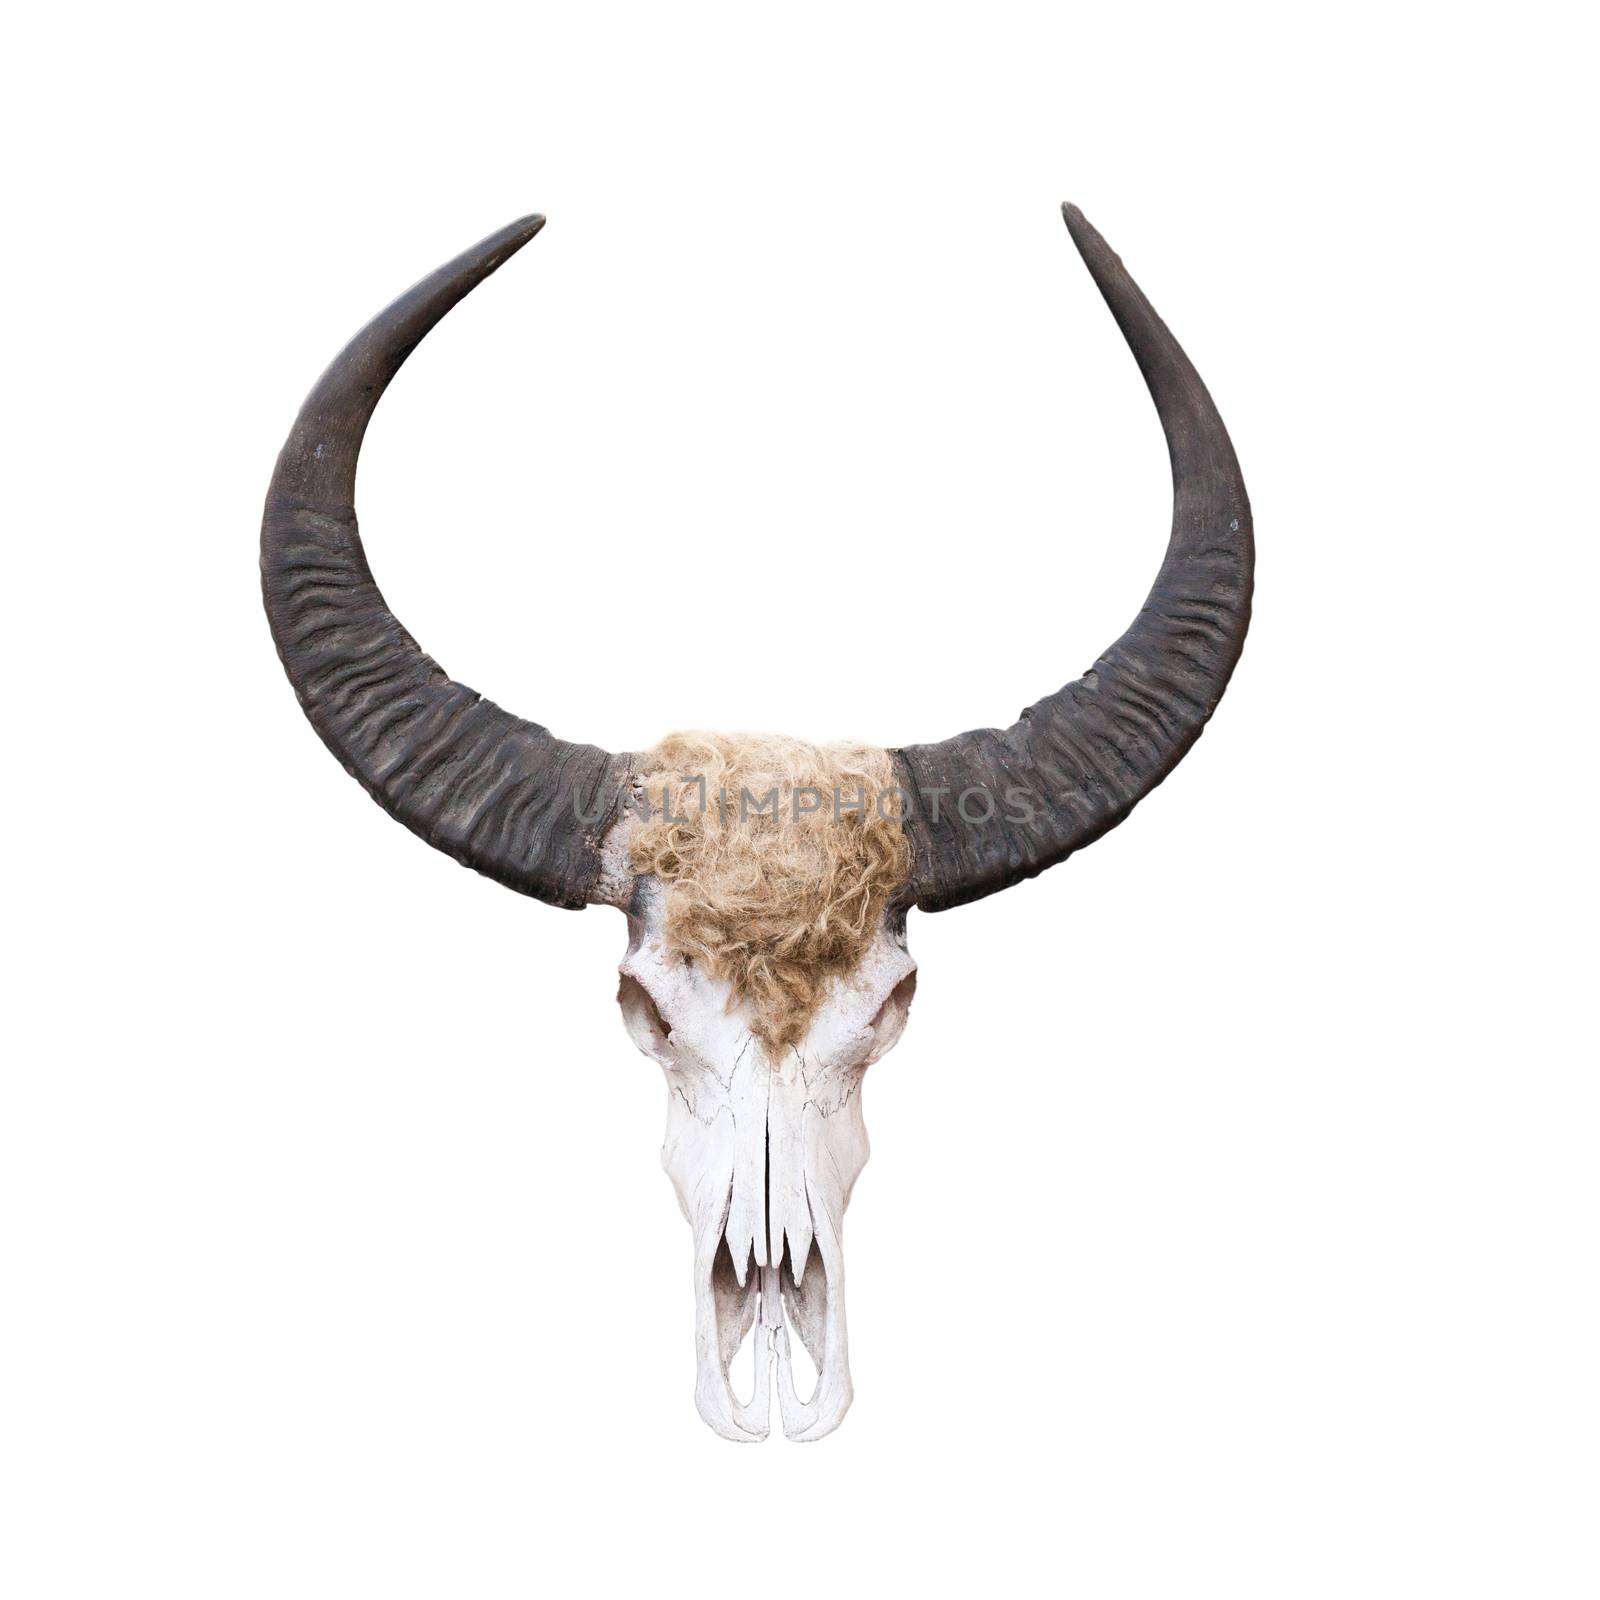 Buffalo skull isolated on white . by nopparats